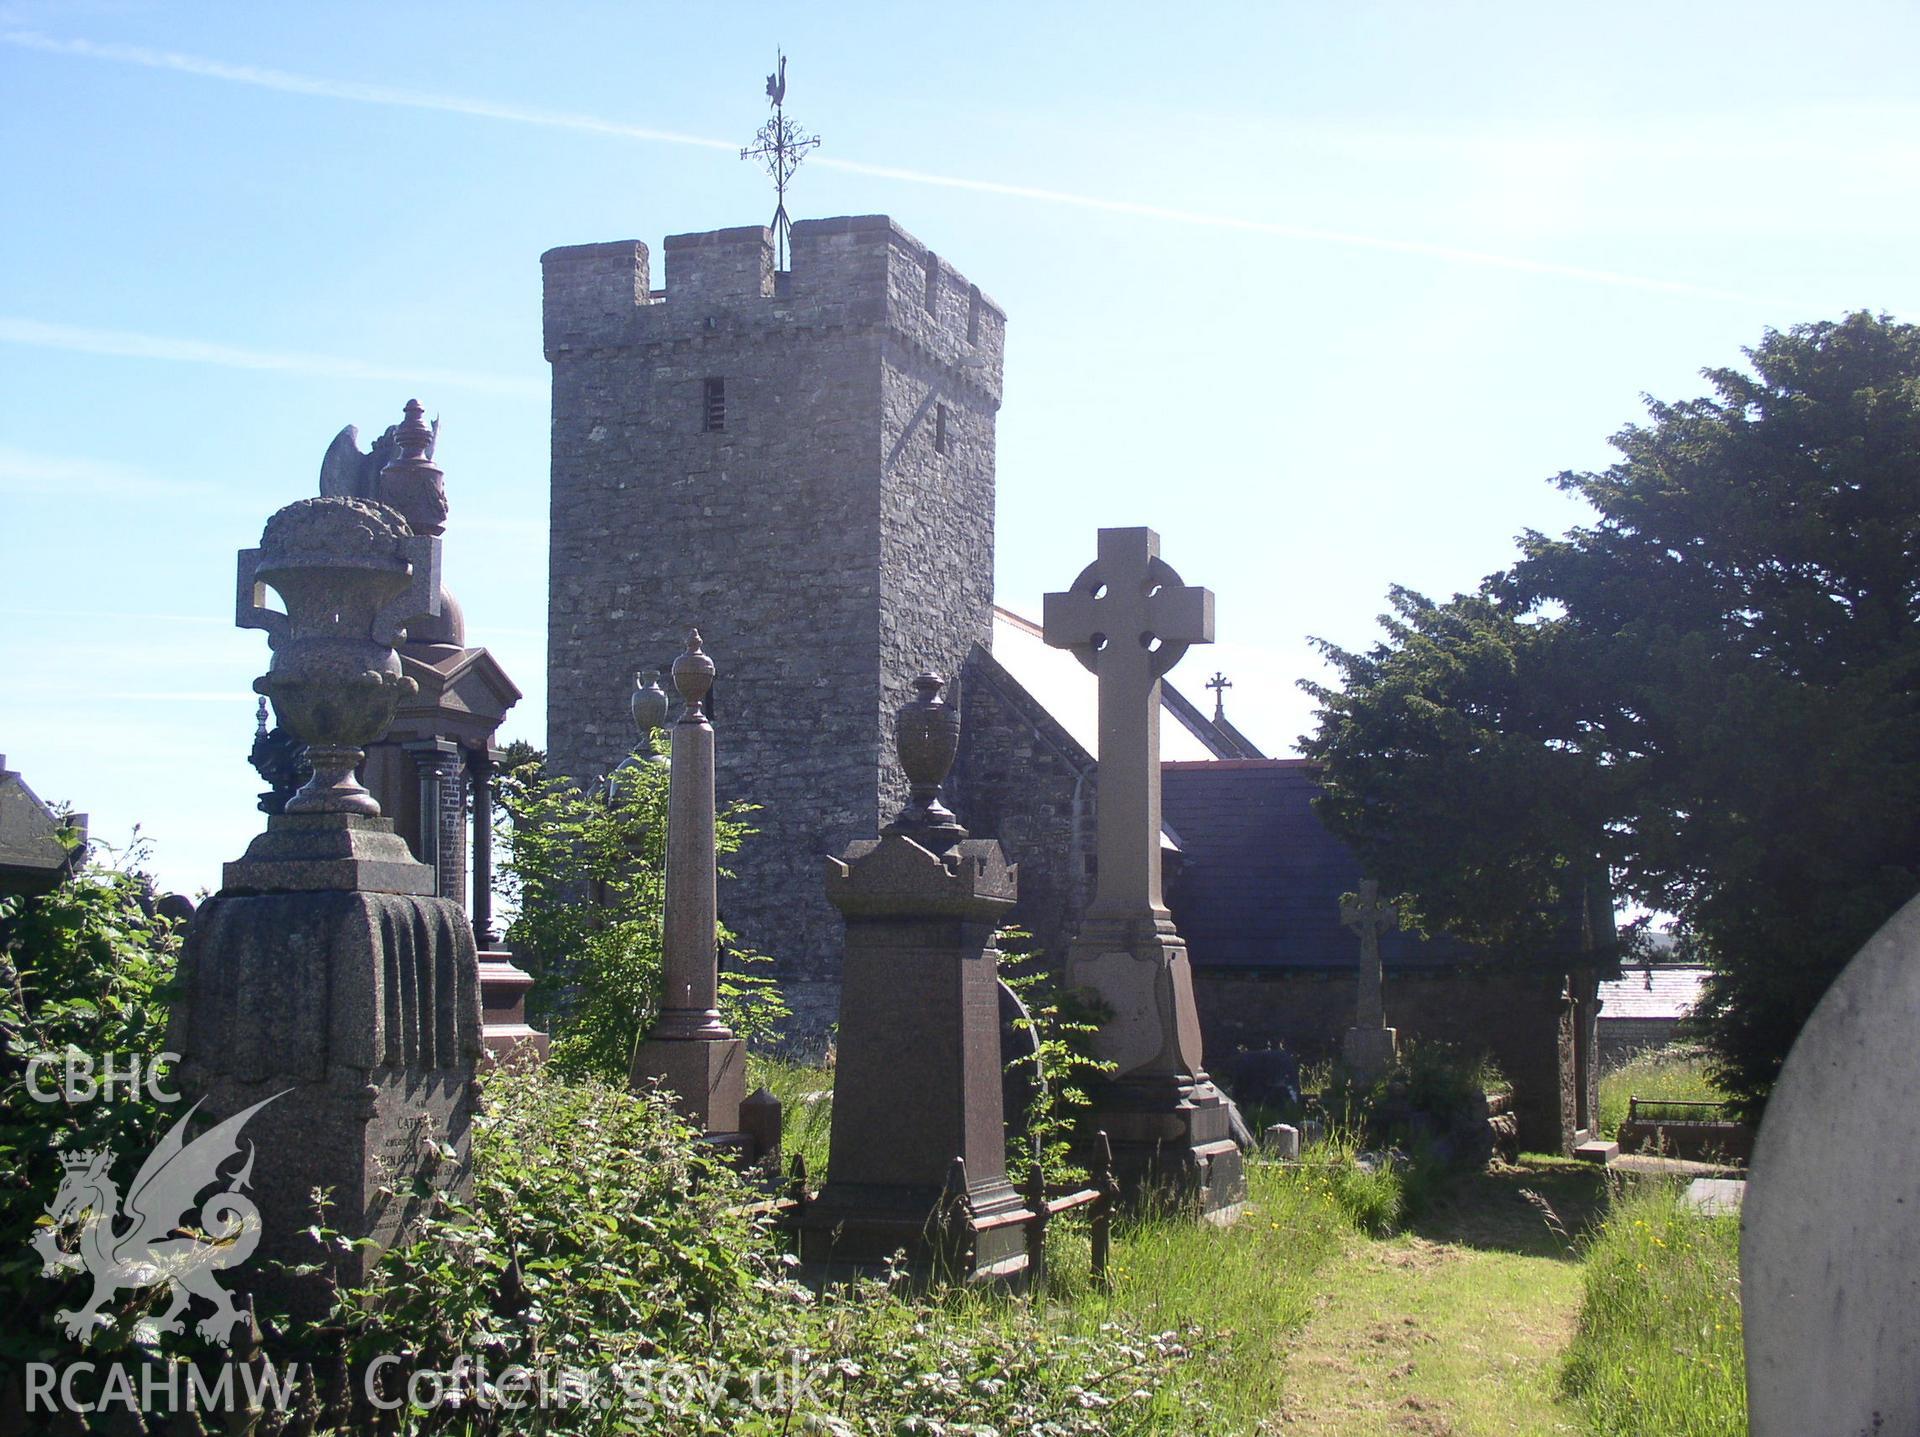 Colour digital photograph showing the exterior of St Cynog's Church, Hirwaun; Glamorgan.